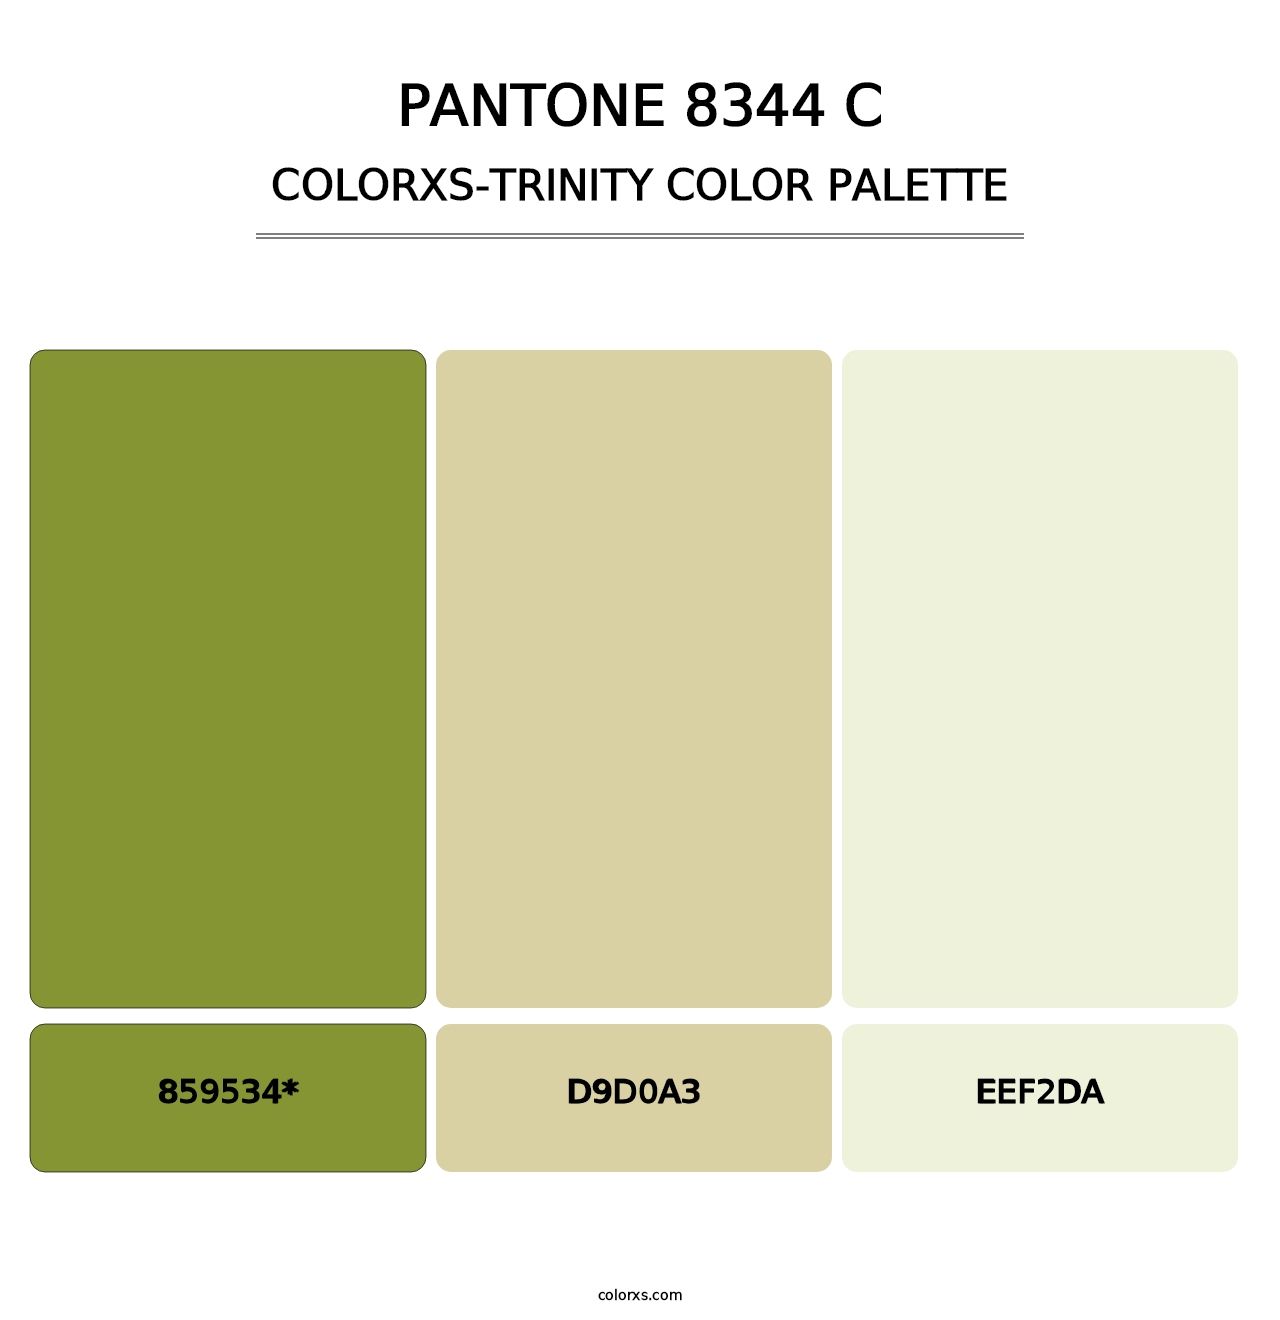 PANTONE 8344 C - Colorxs Trinity Palette